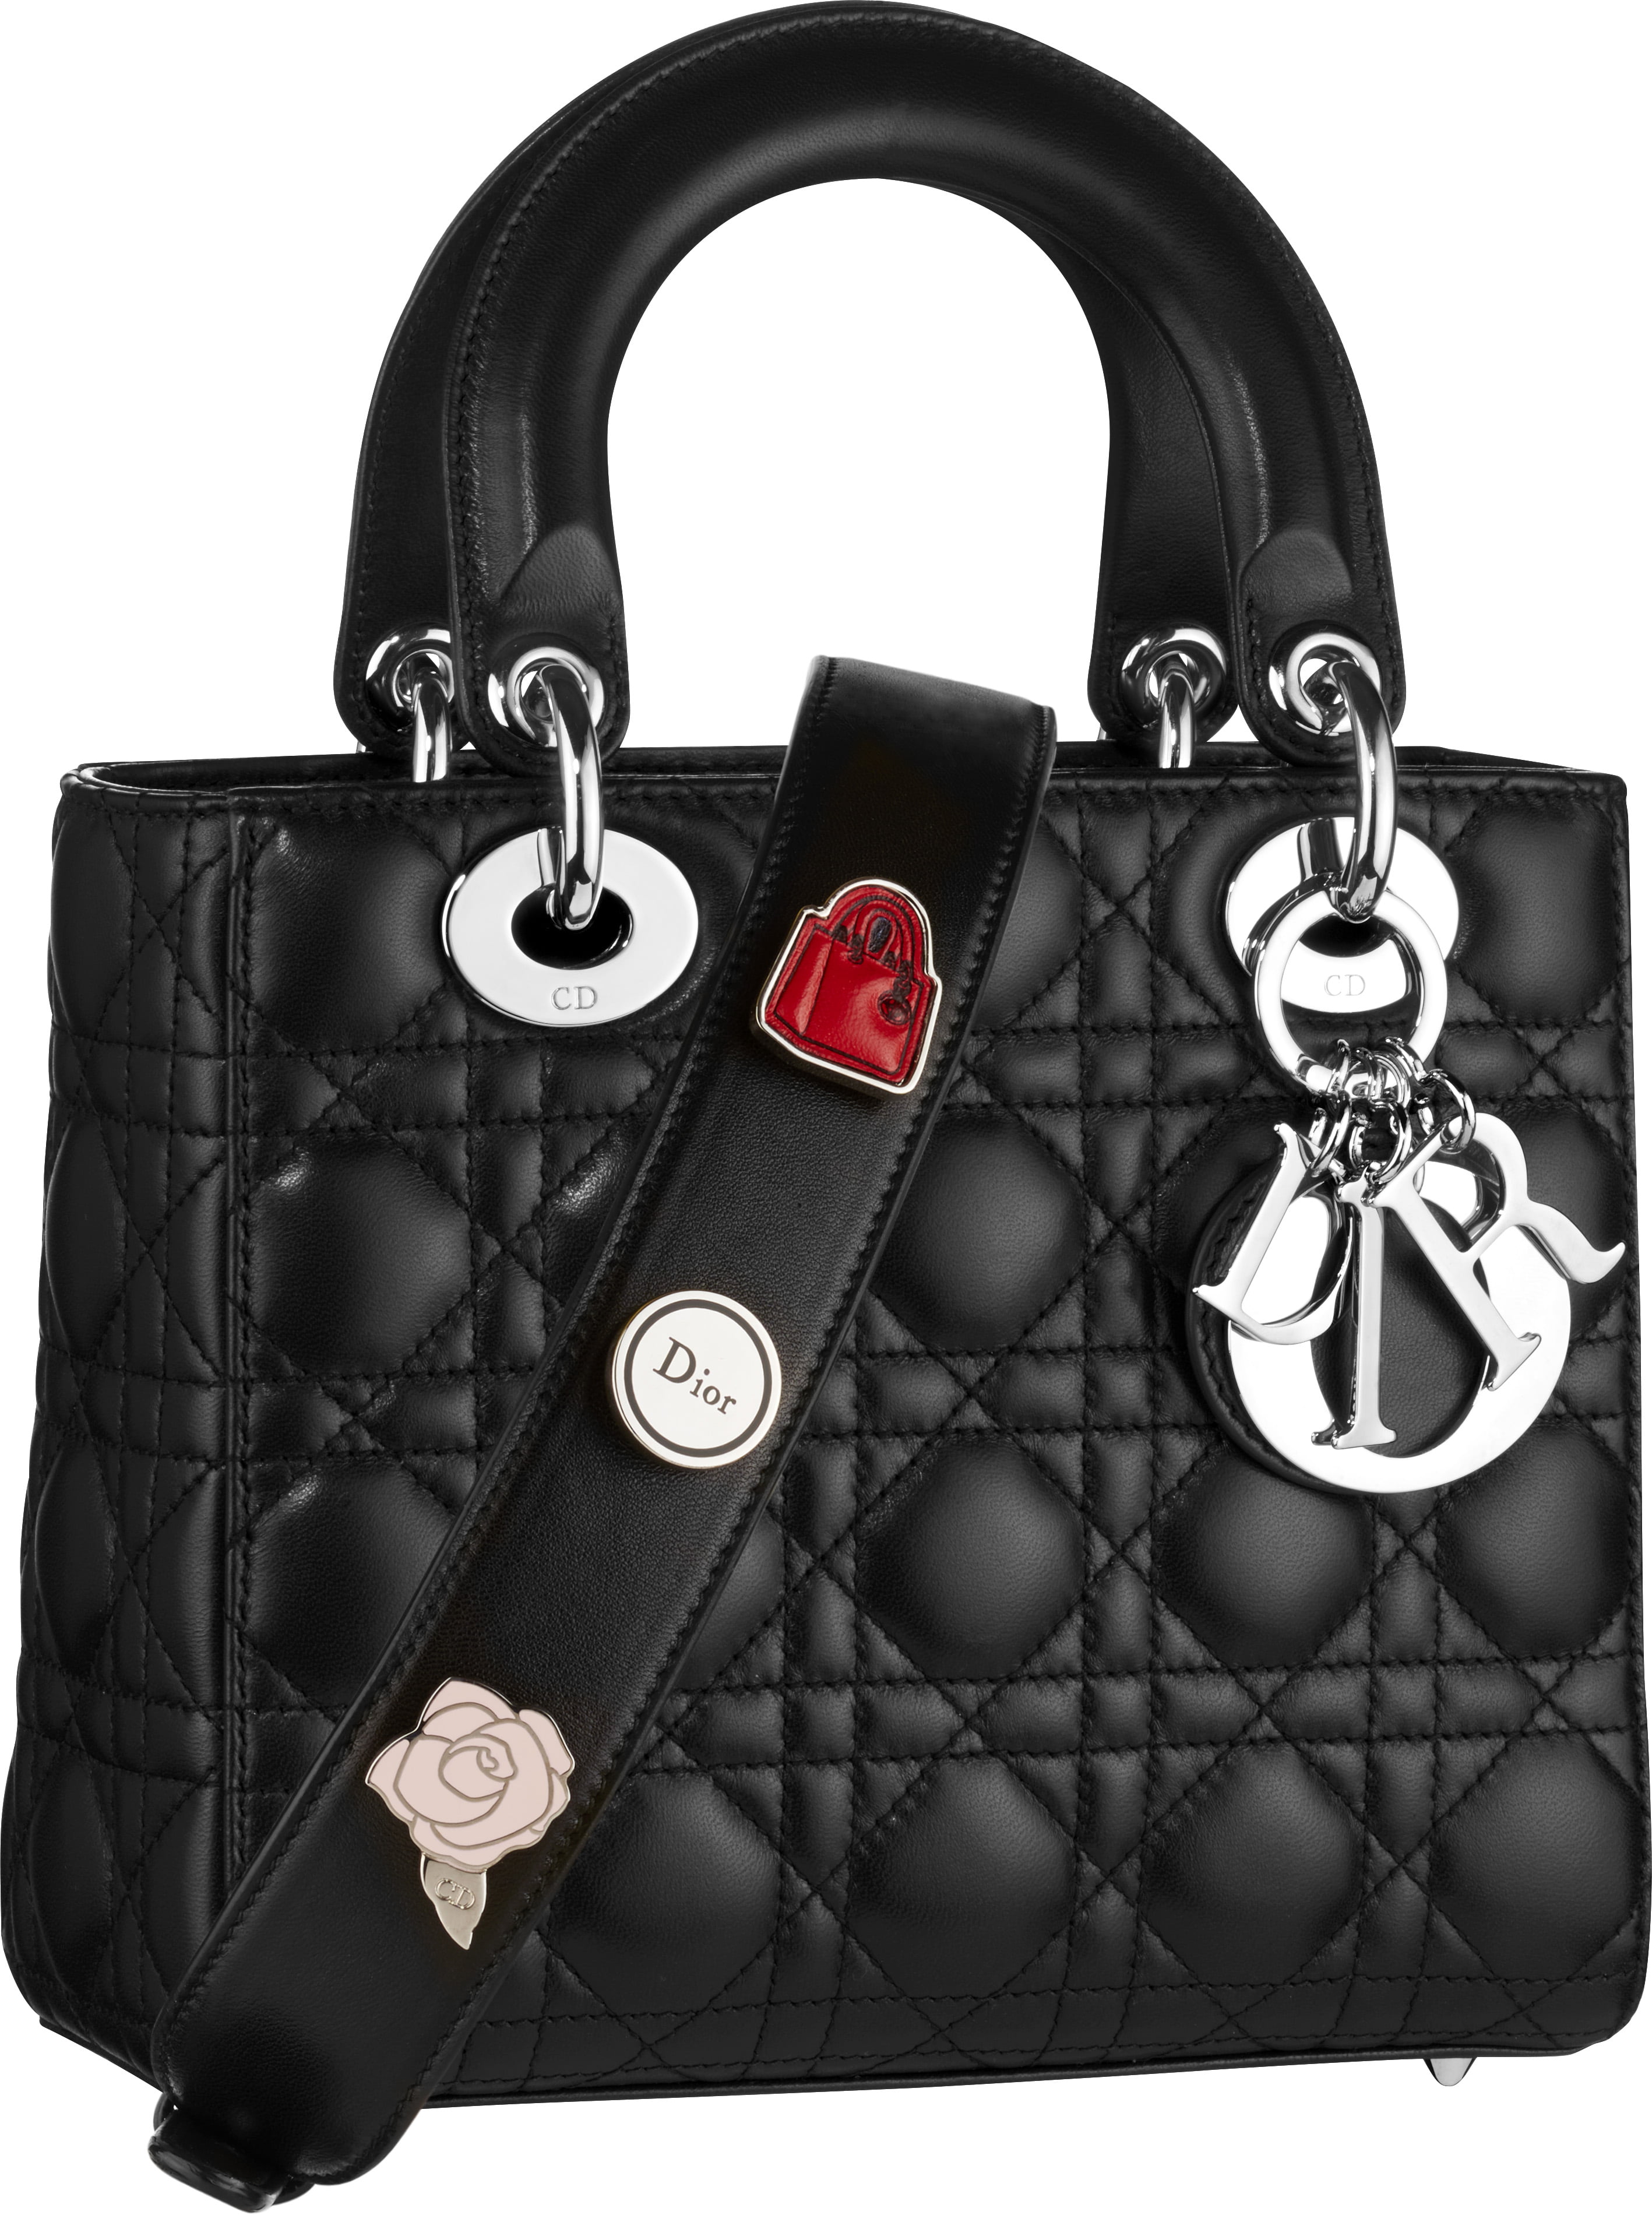 Pin on Dior women's bag